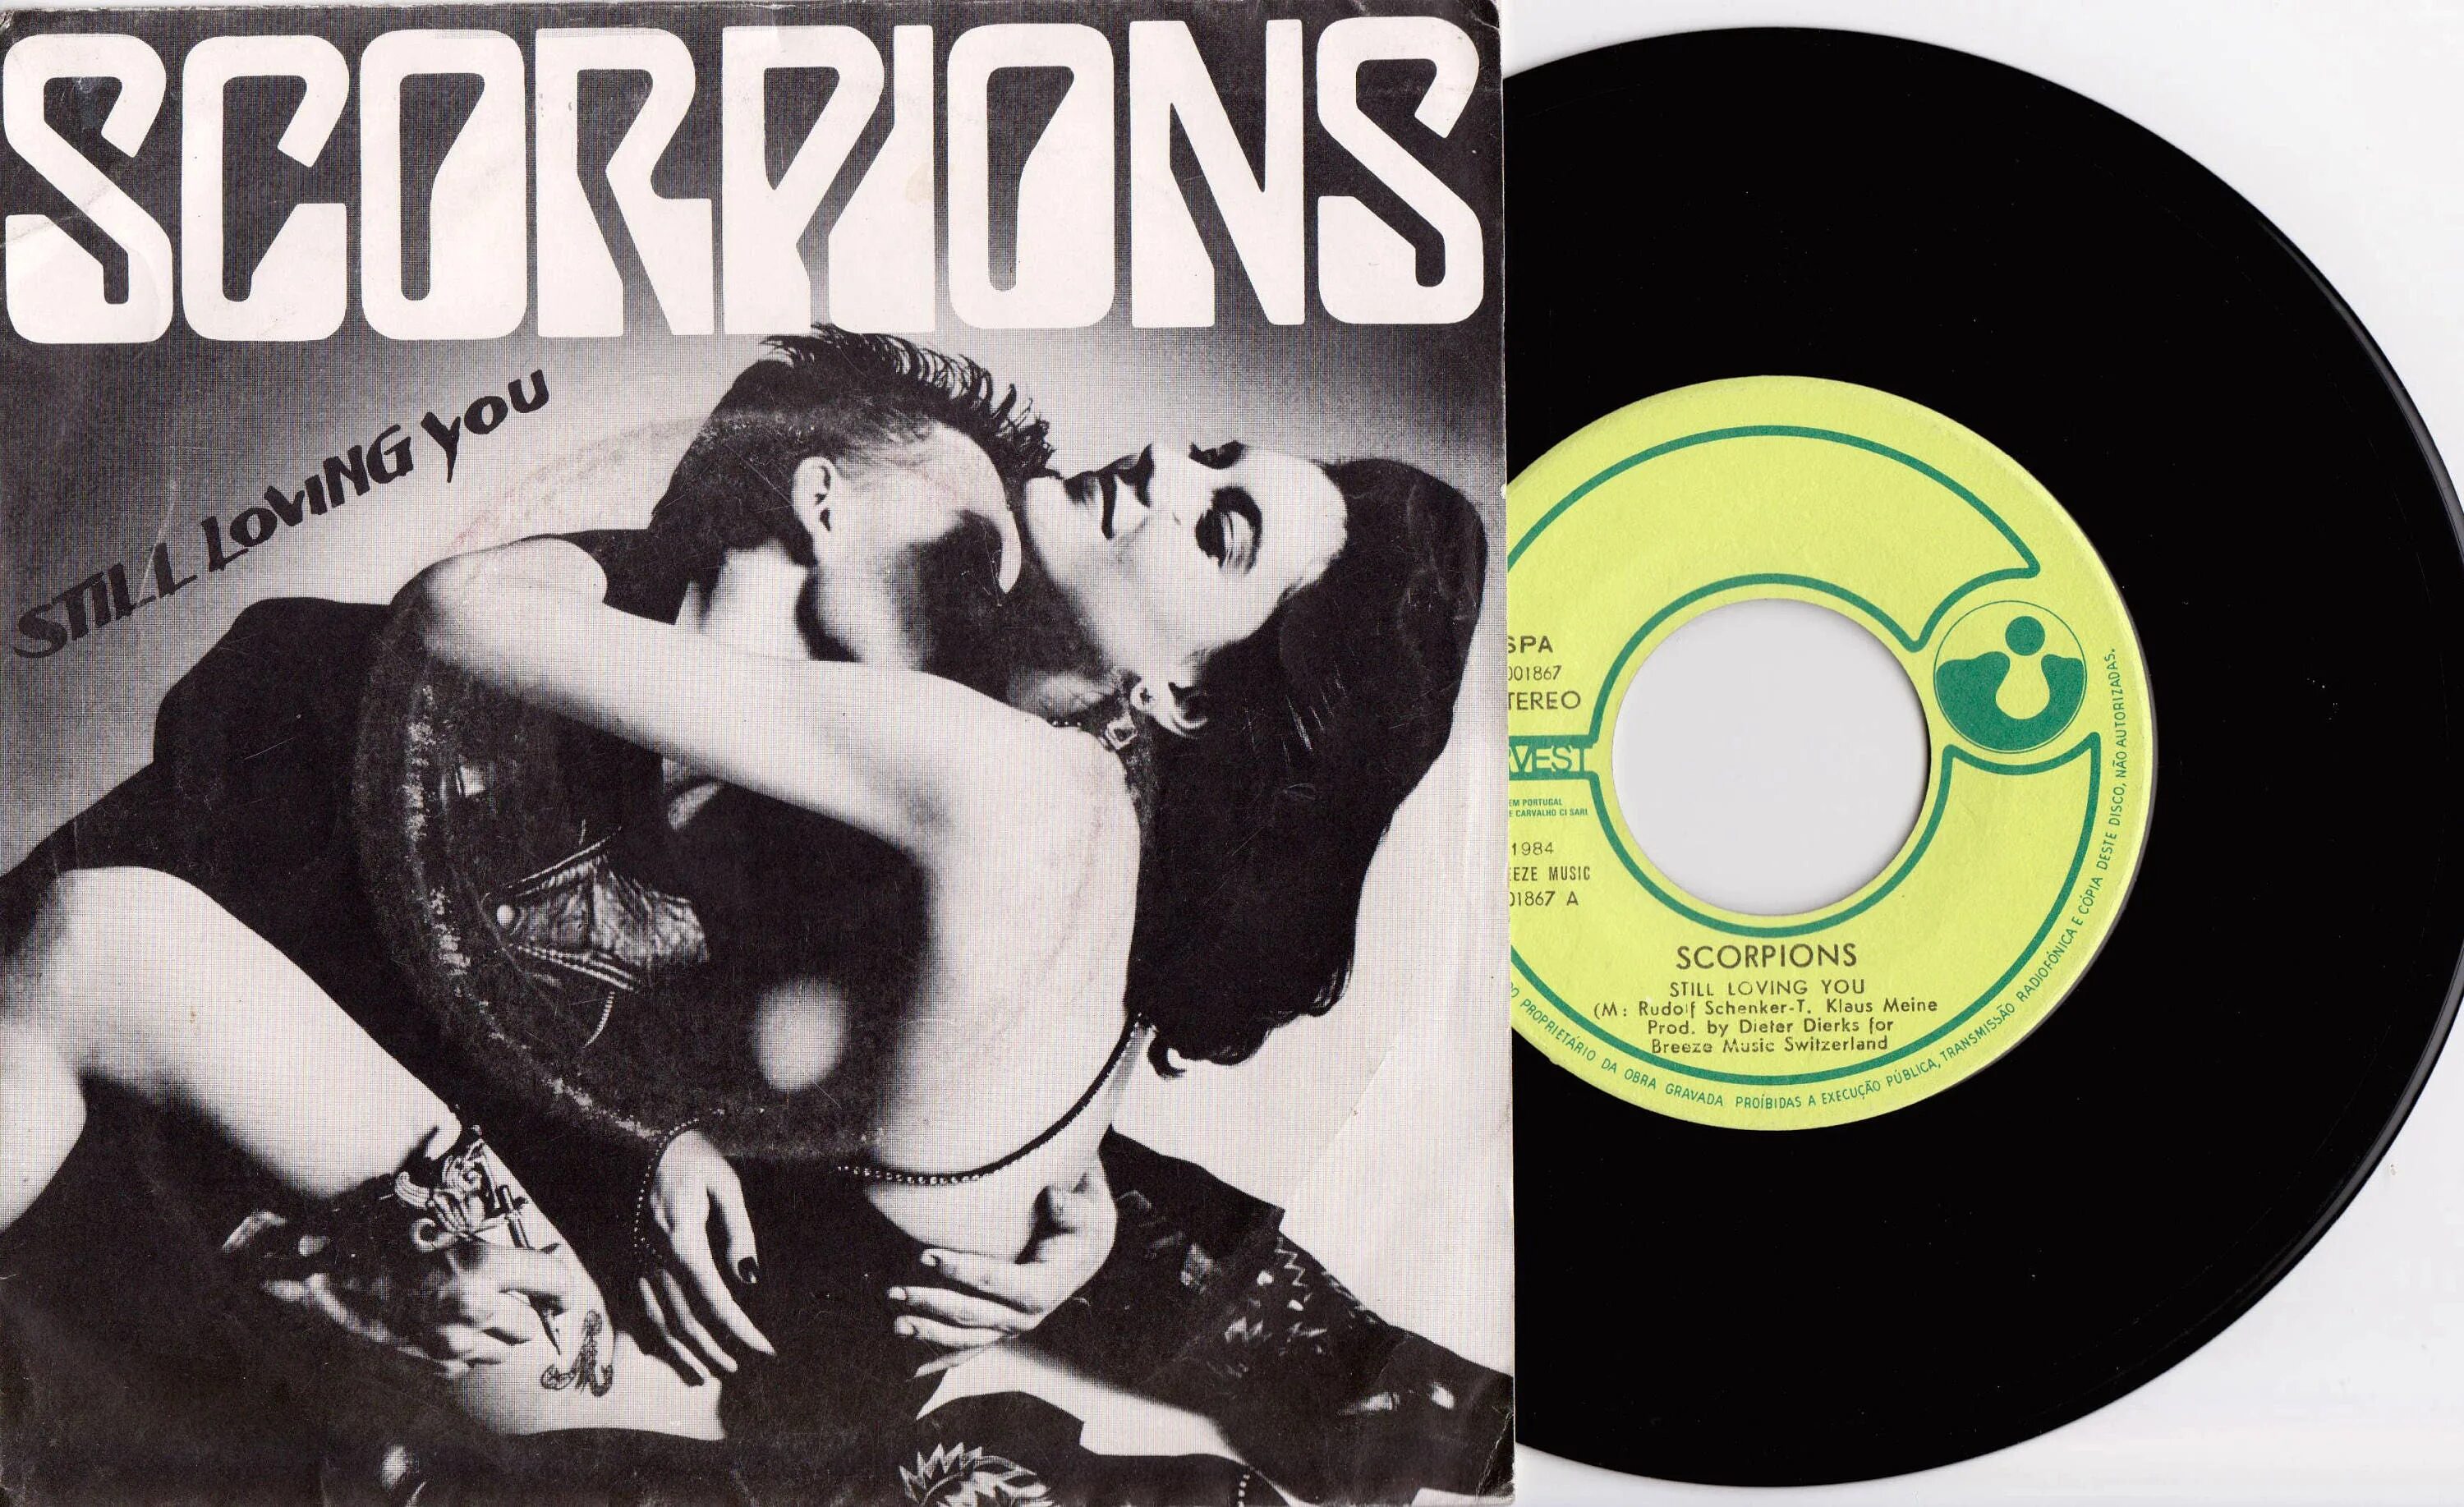 L still loving you. Скорпионс винил 1984. Скорпионс стил. Scorpions still loving you 1984. Scorpions 1984 Love at first Sting LP.